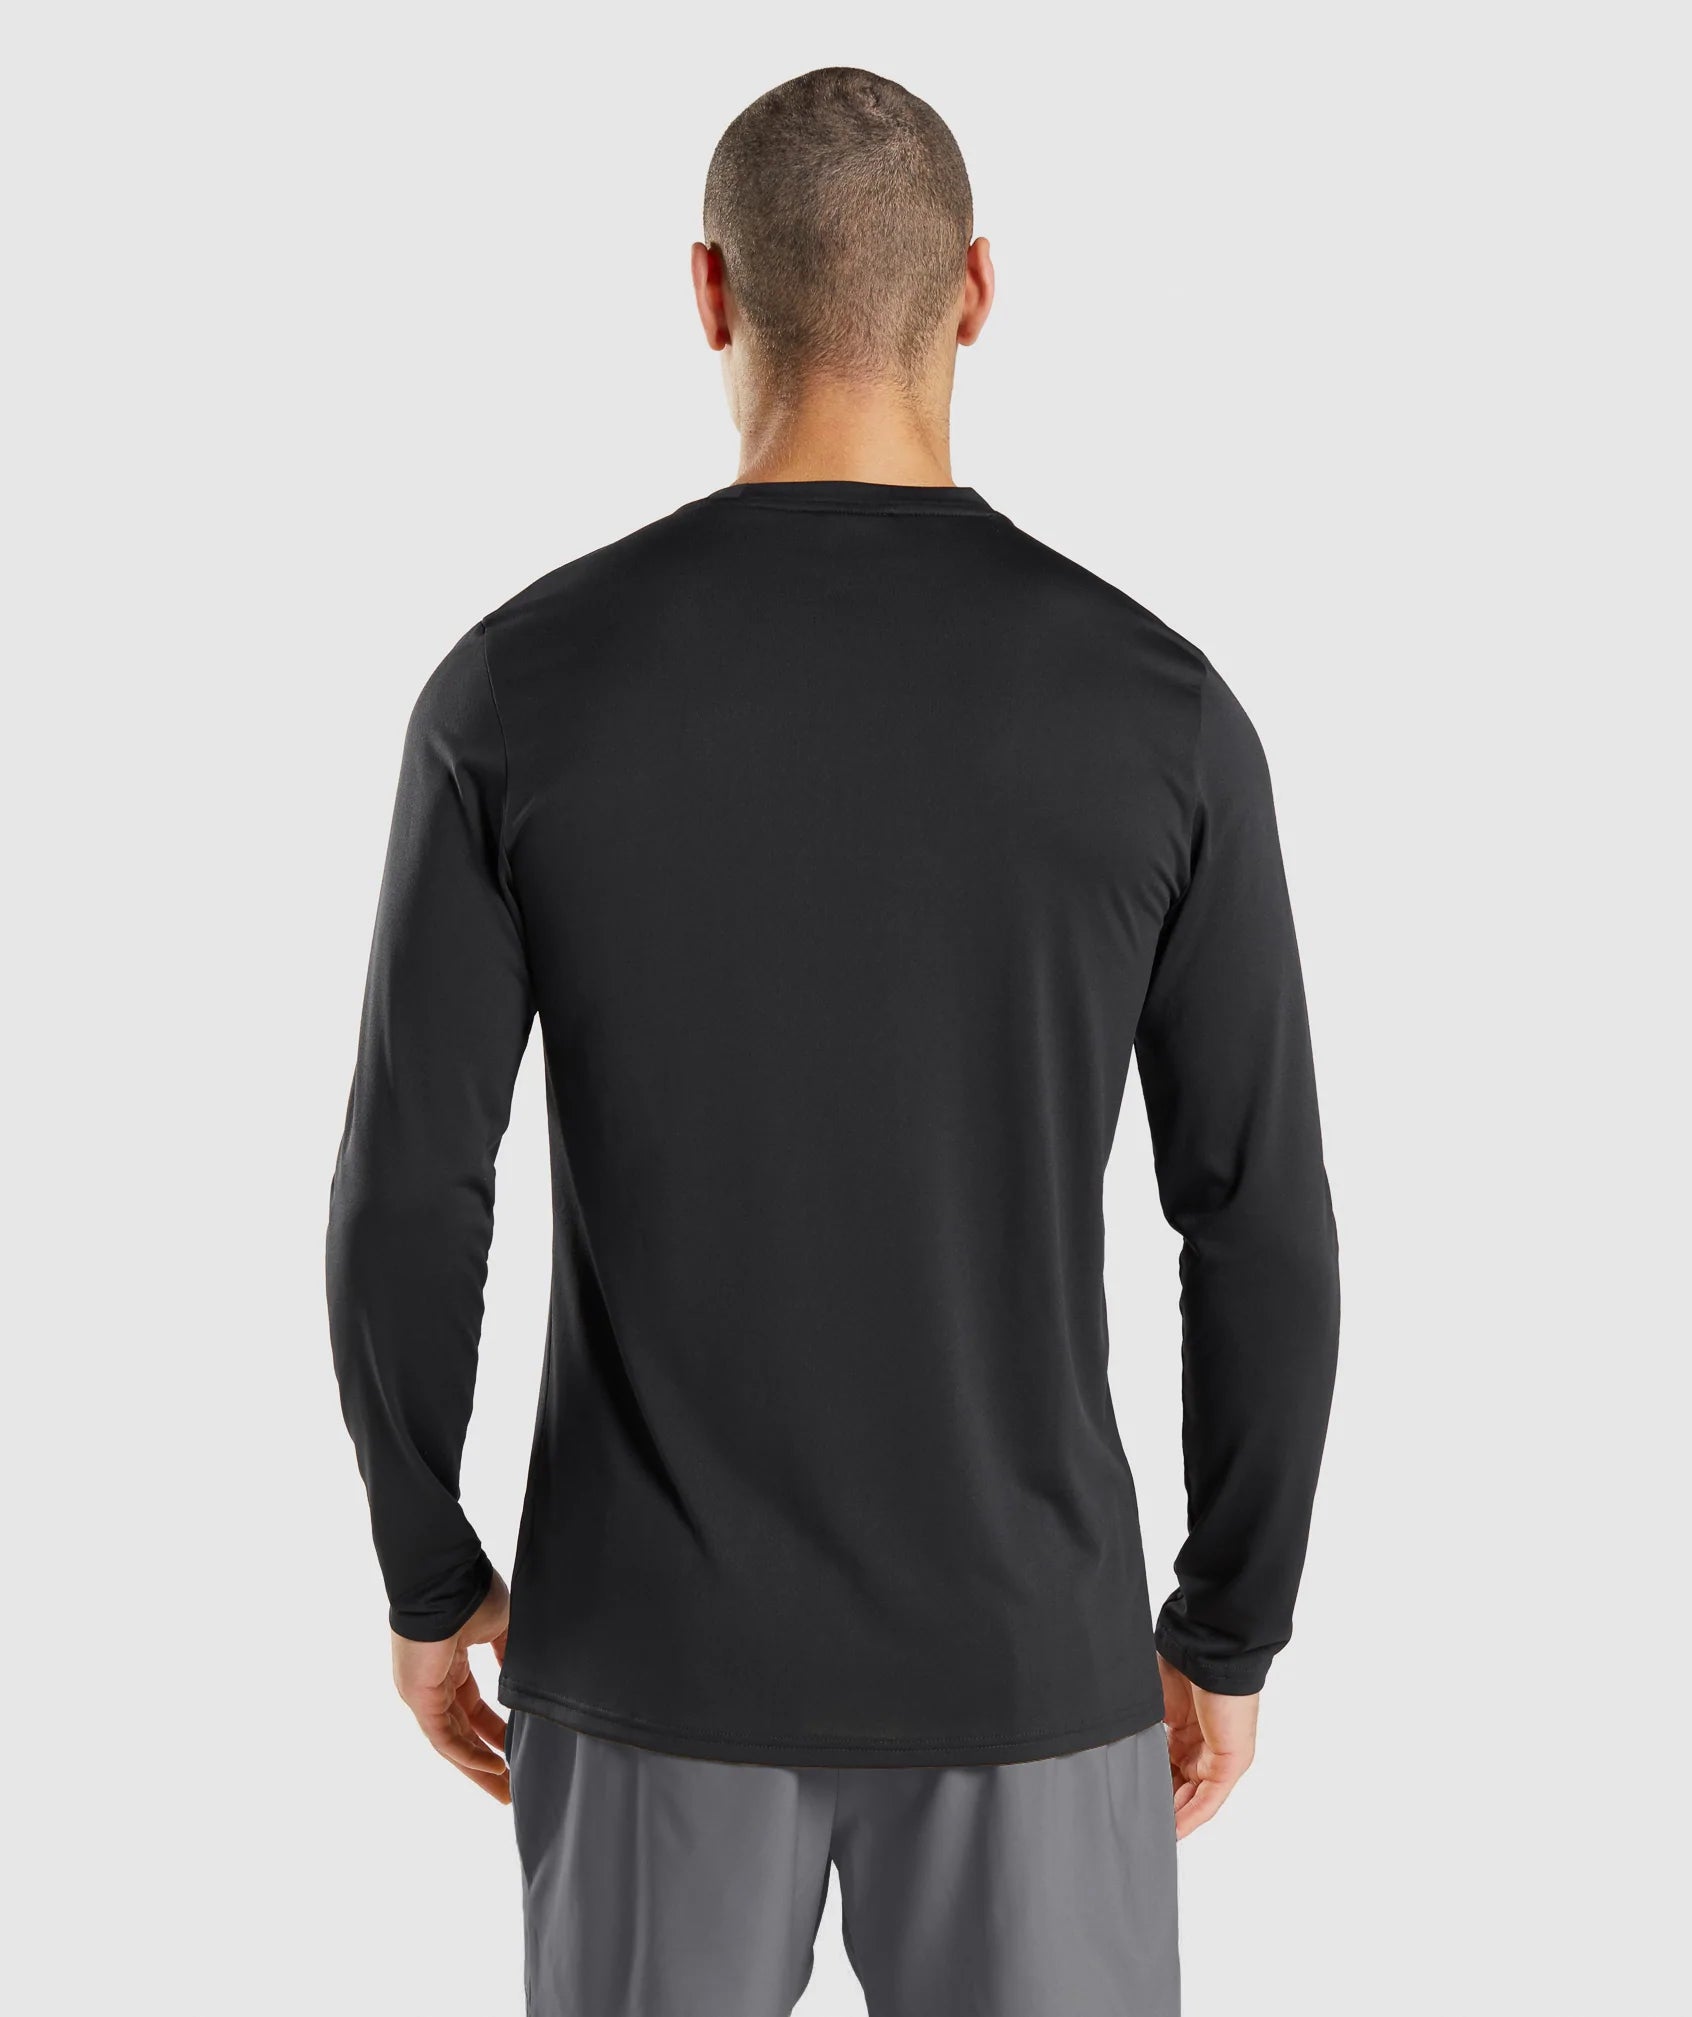 Gymshark Apollo Long Sleeve T-Shirt - Black/Silhouette Grey